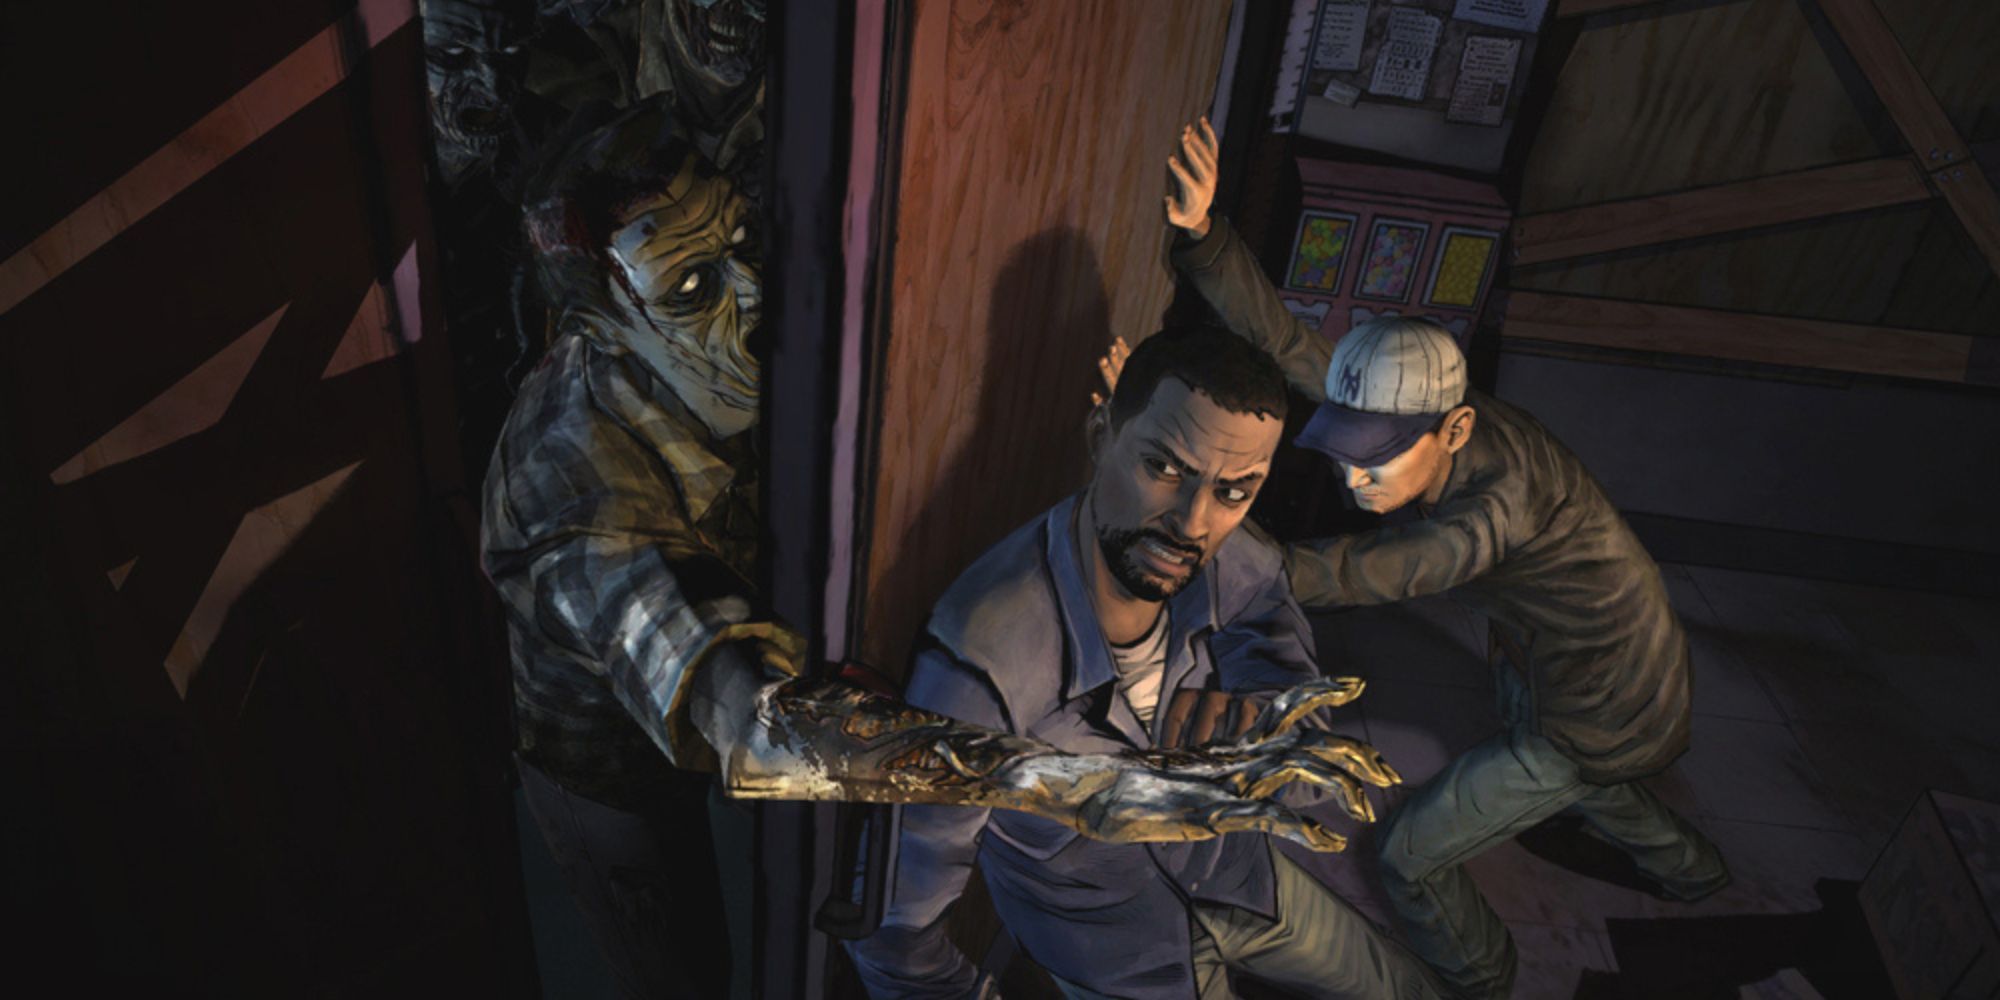 Lee holding off zombies In Telltale's The Walking Dead